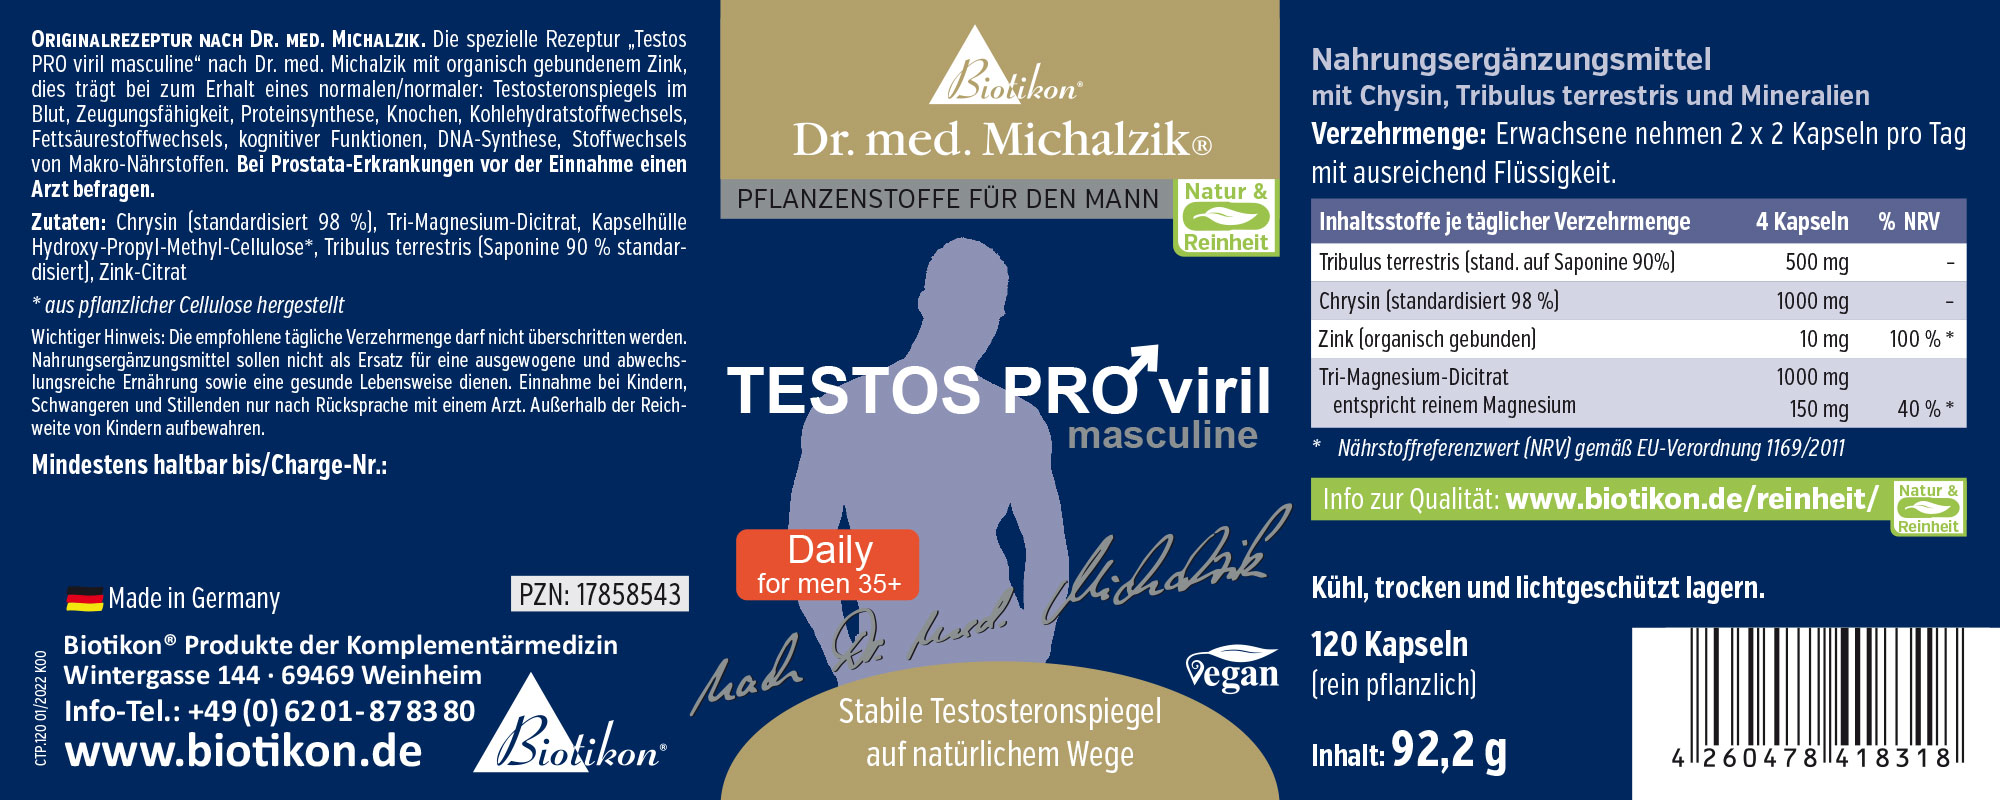 Testos PRO viril masuline. di Dr. med. Michalzik